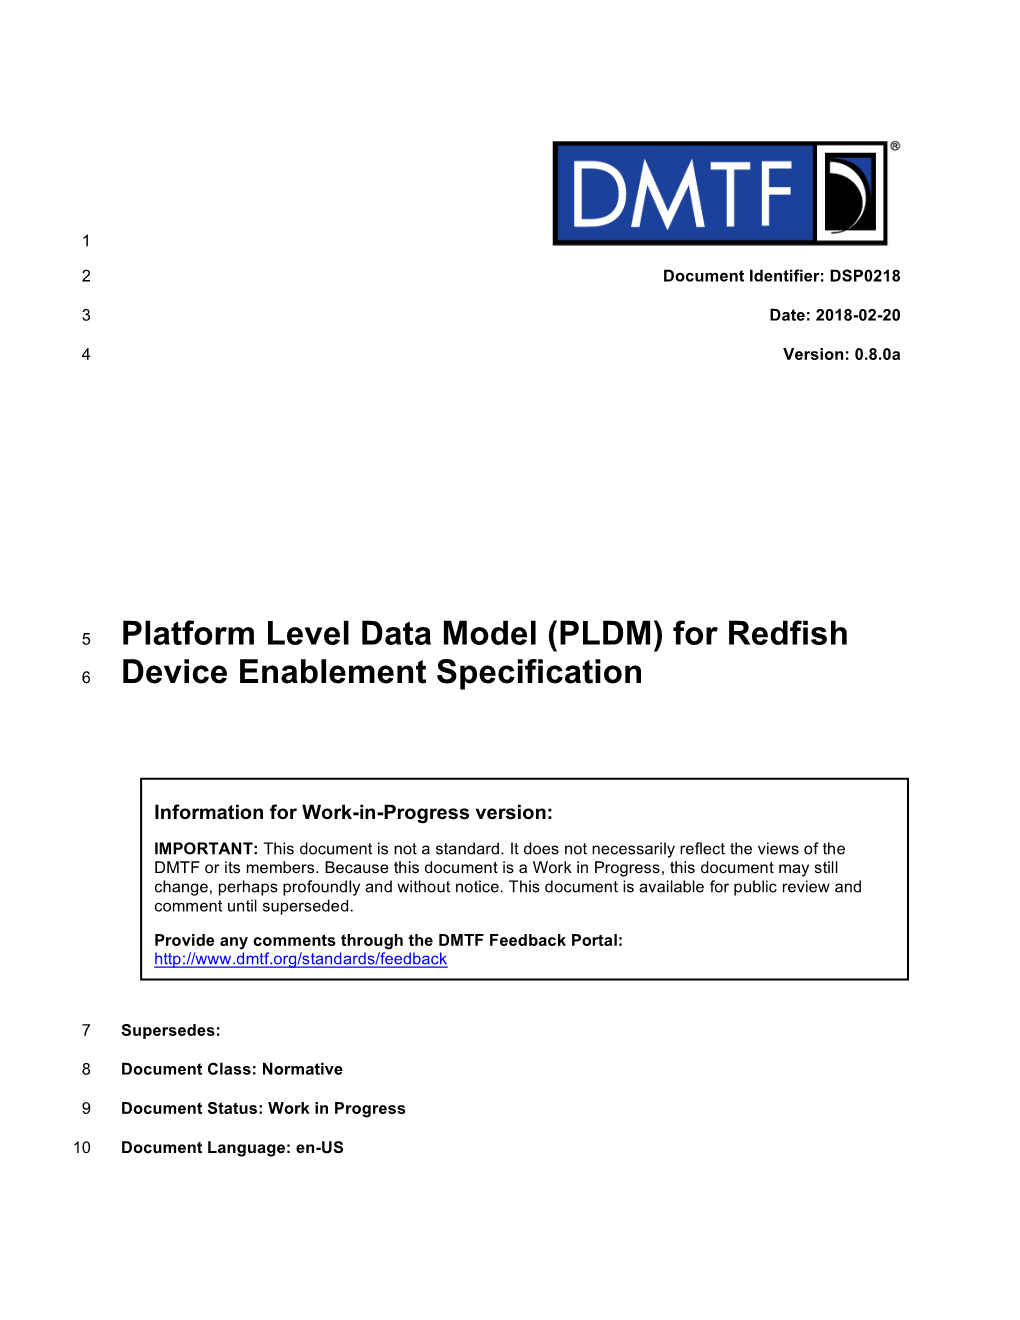 Platform Level Data Model (PLDM) for Redfish Device Enablement